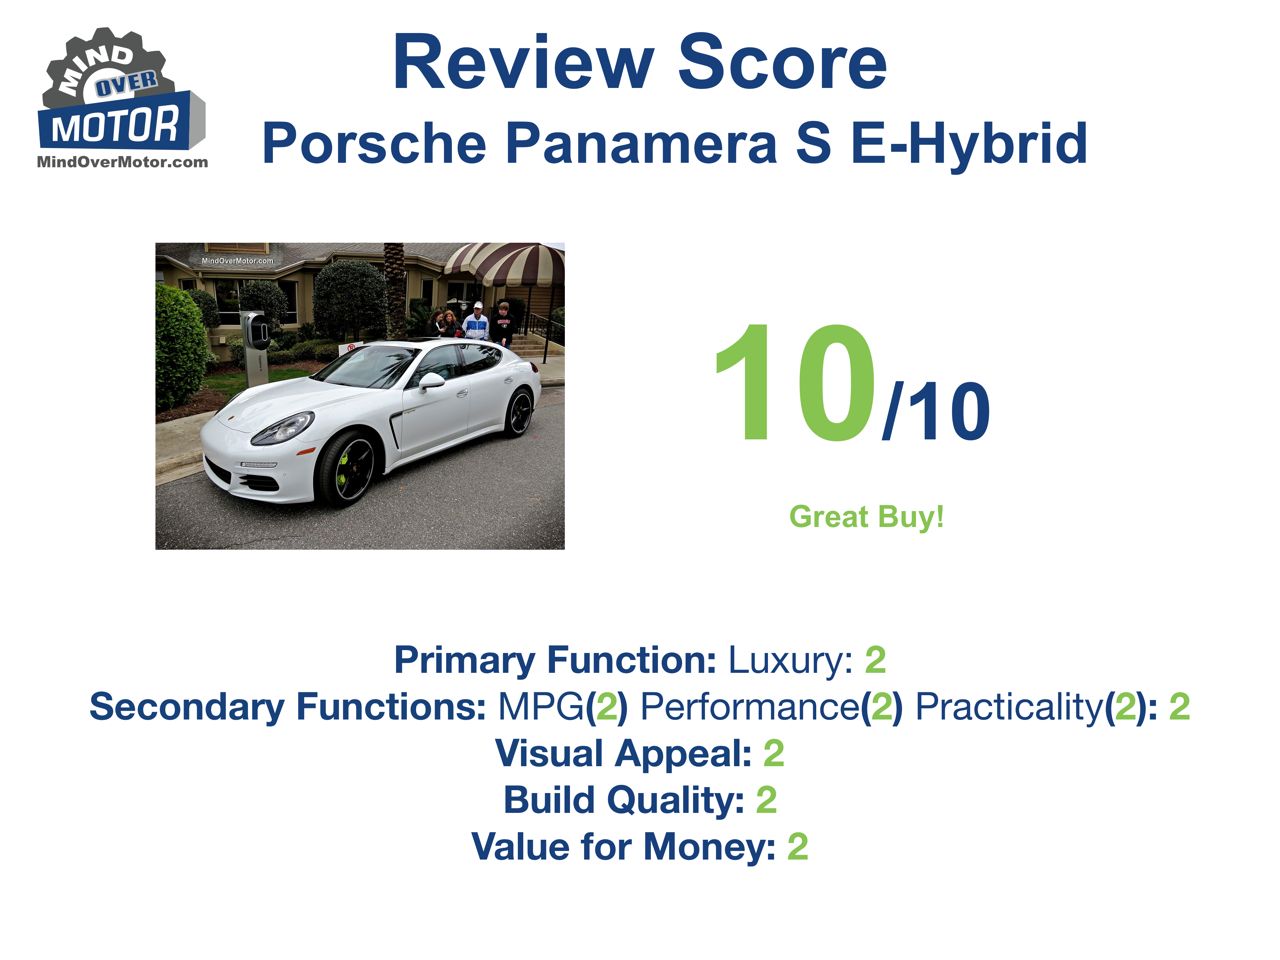 Review Score Porsche Panamera S E-Hybrid